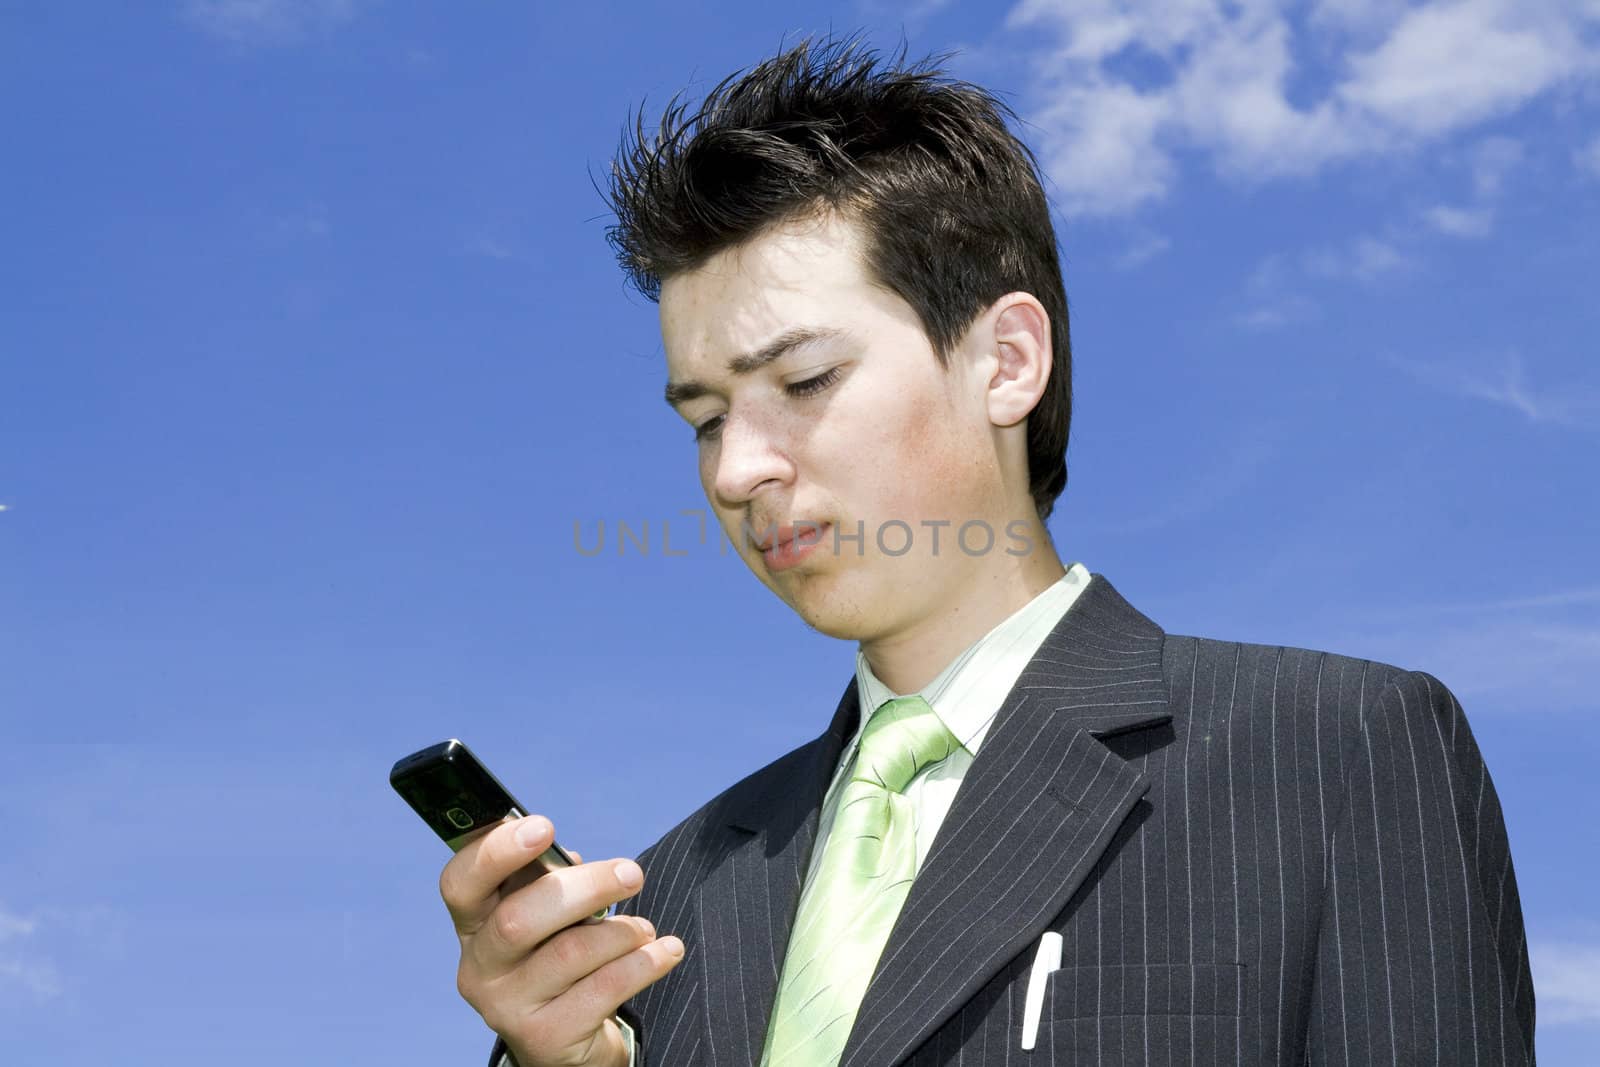 Businessman with cellphone by Nikonas